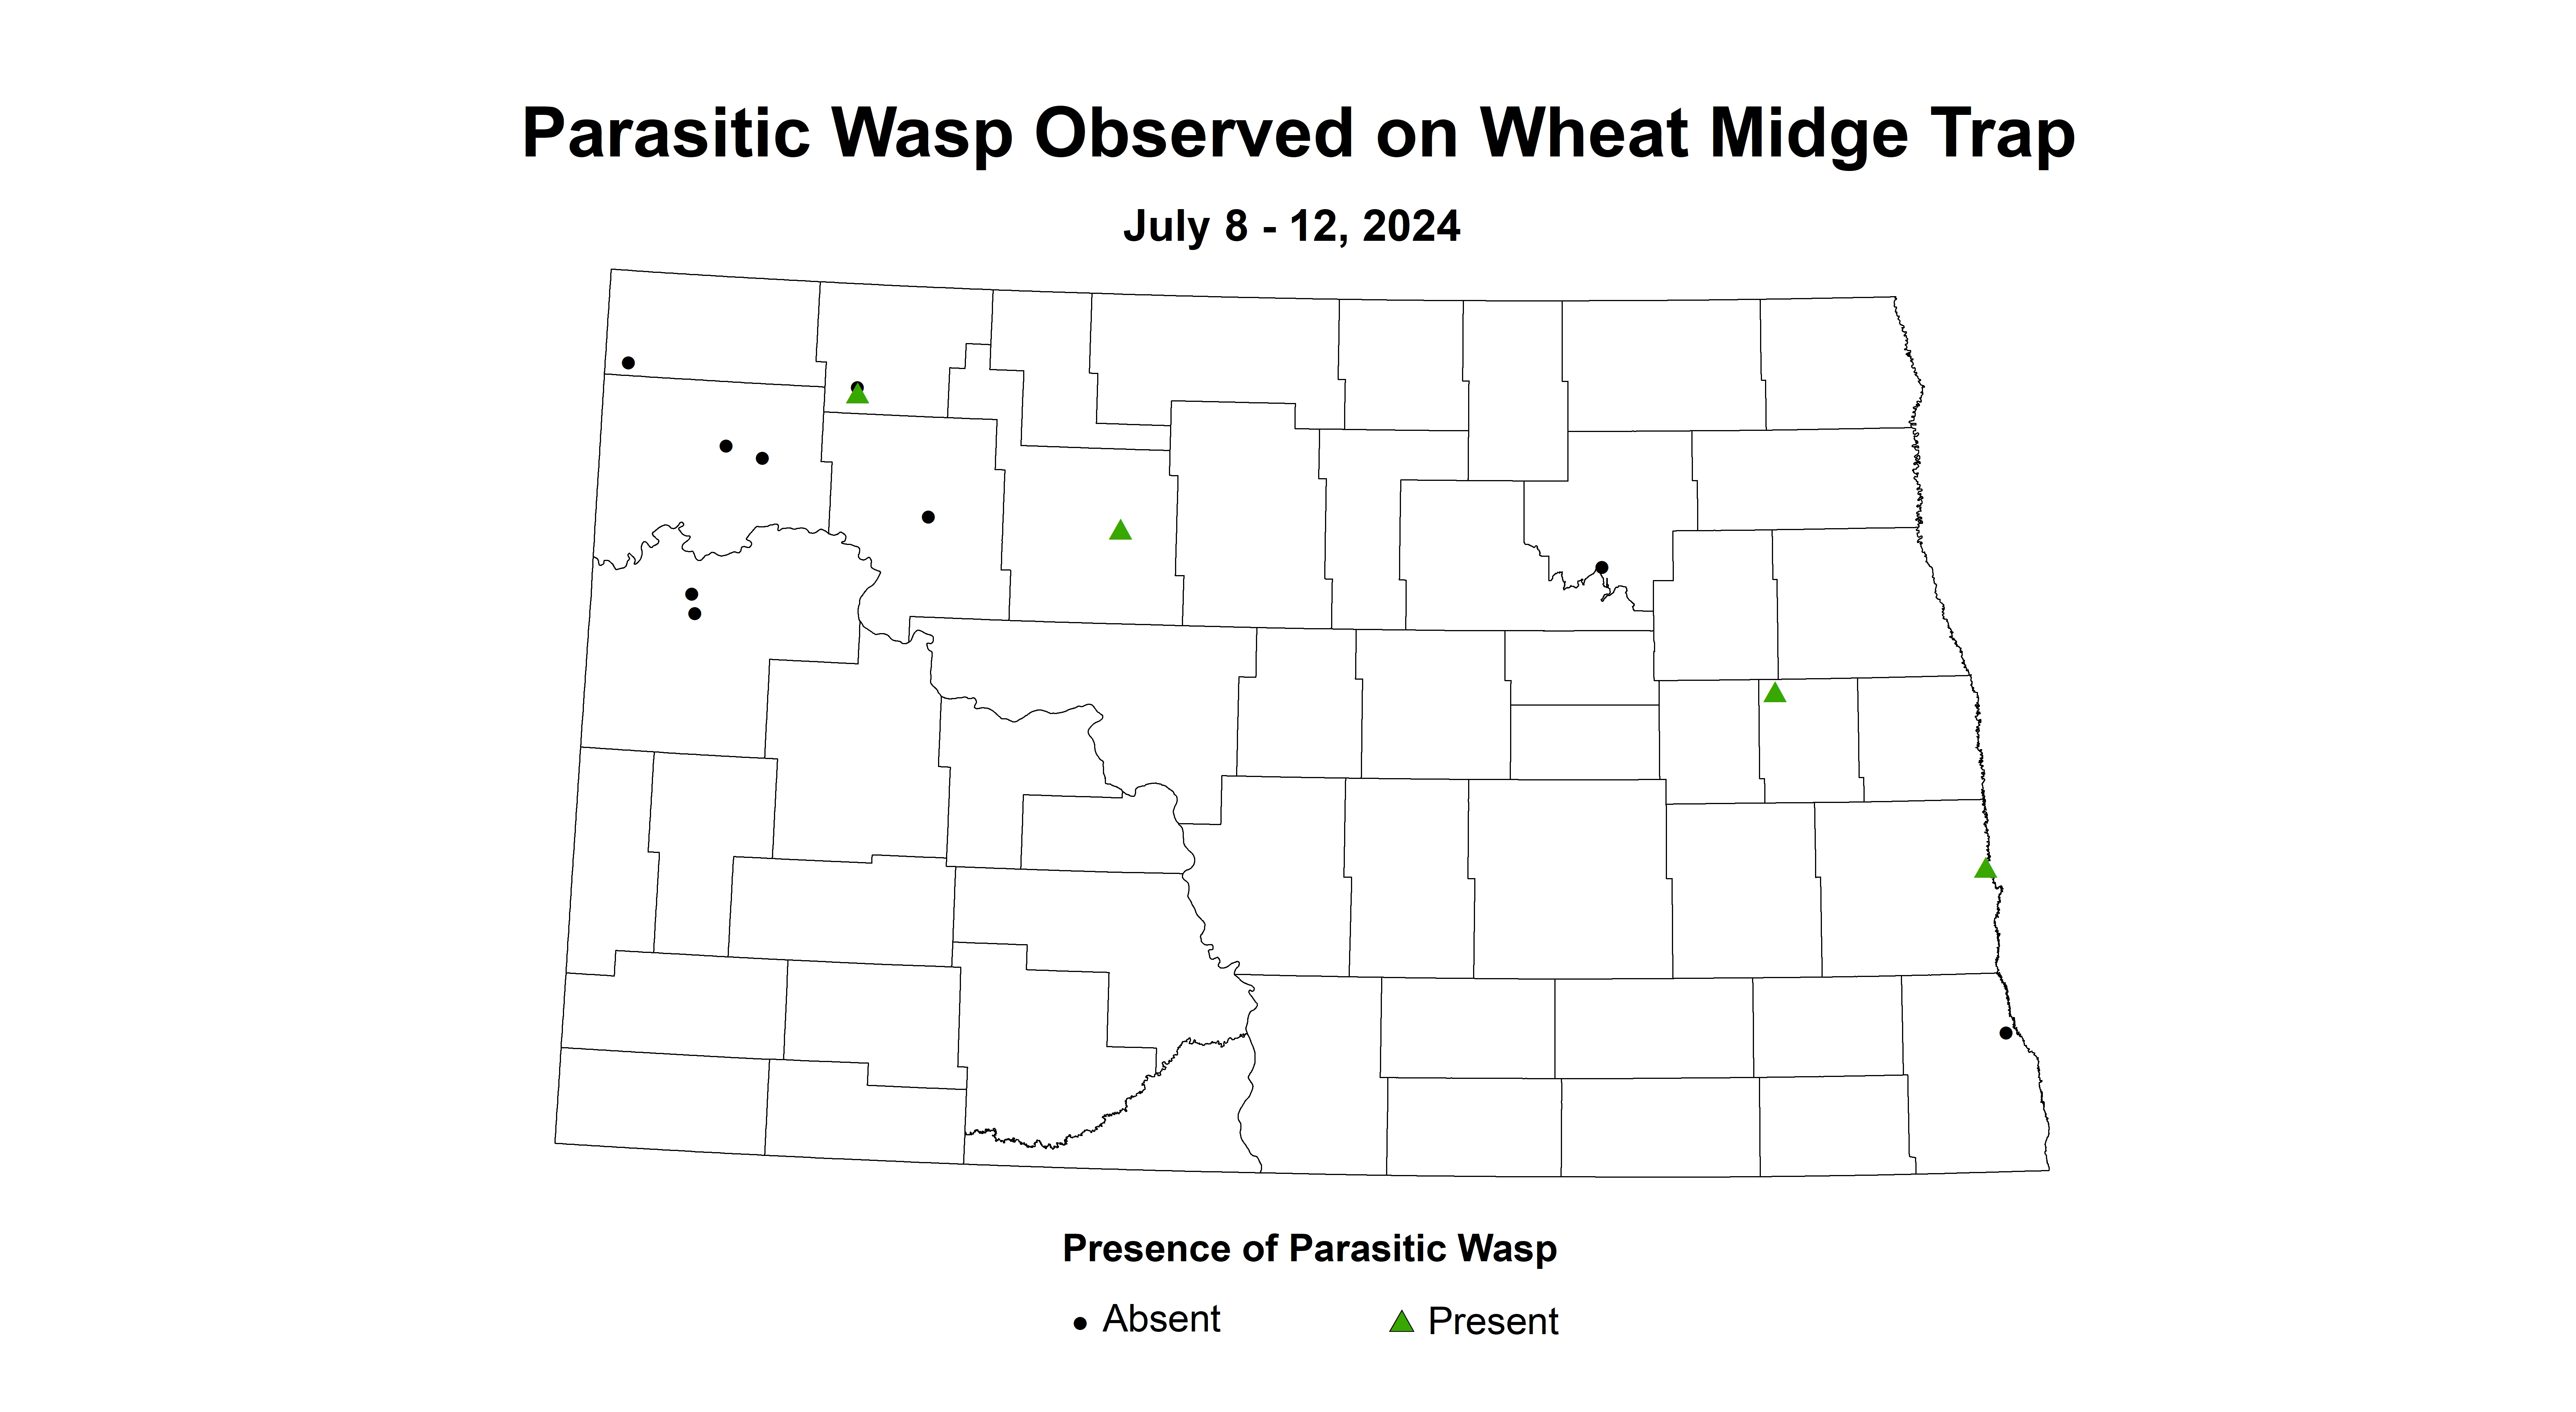 wheat midge trap parasitic wasp July 8 - 12 2024